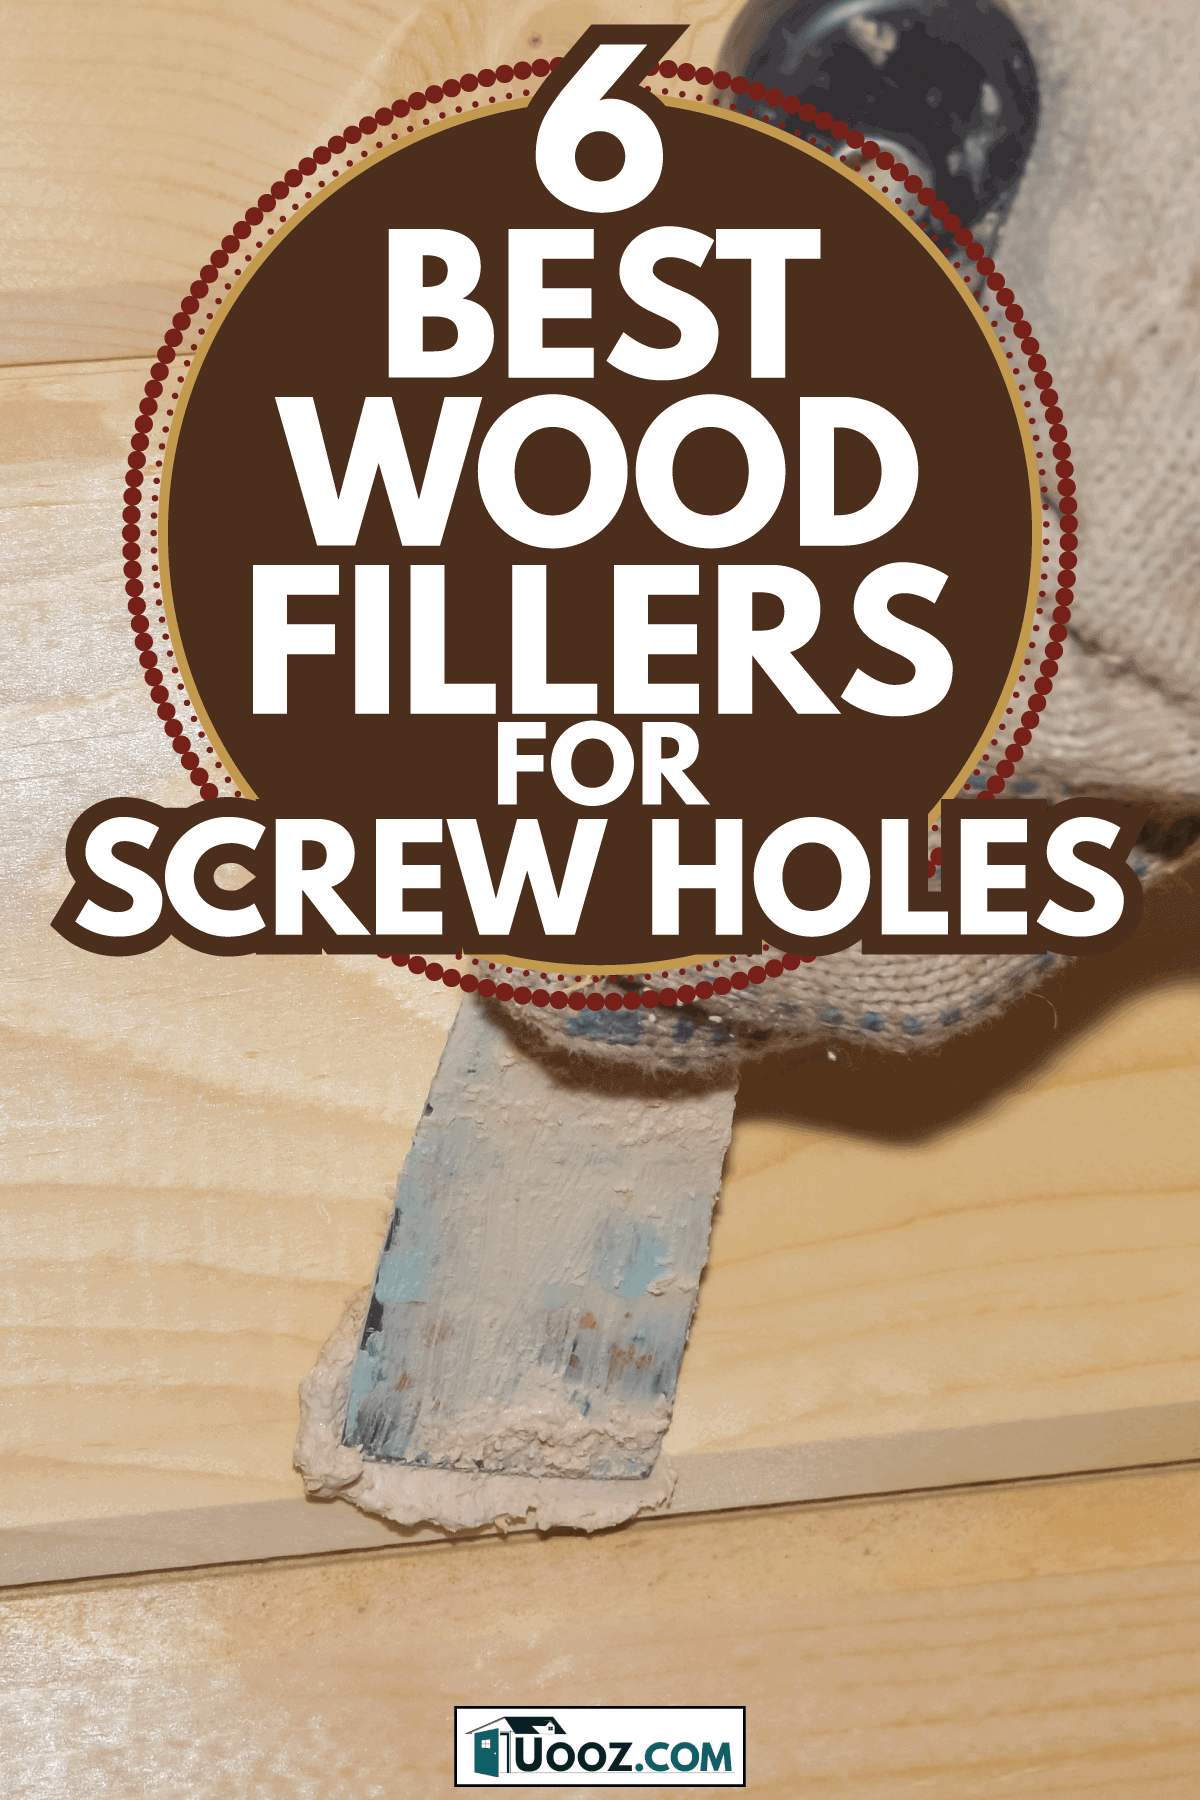 worker wearing gloves applying filler on wood. 6 Best Wood Fillers For Screw Holes